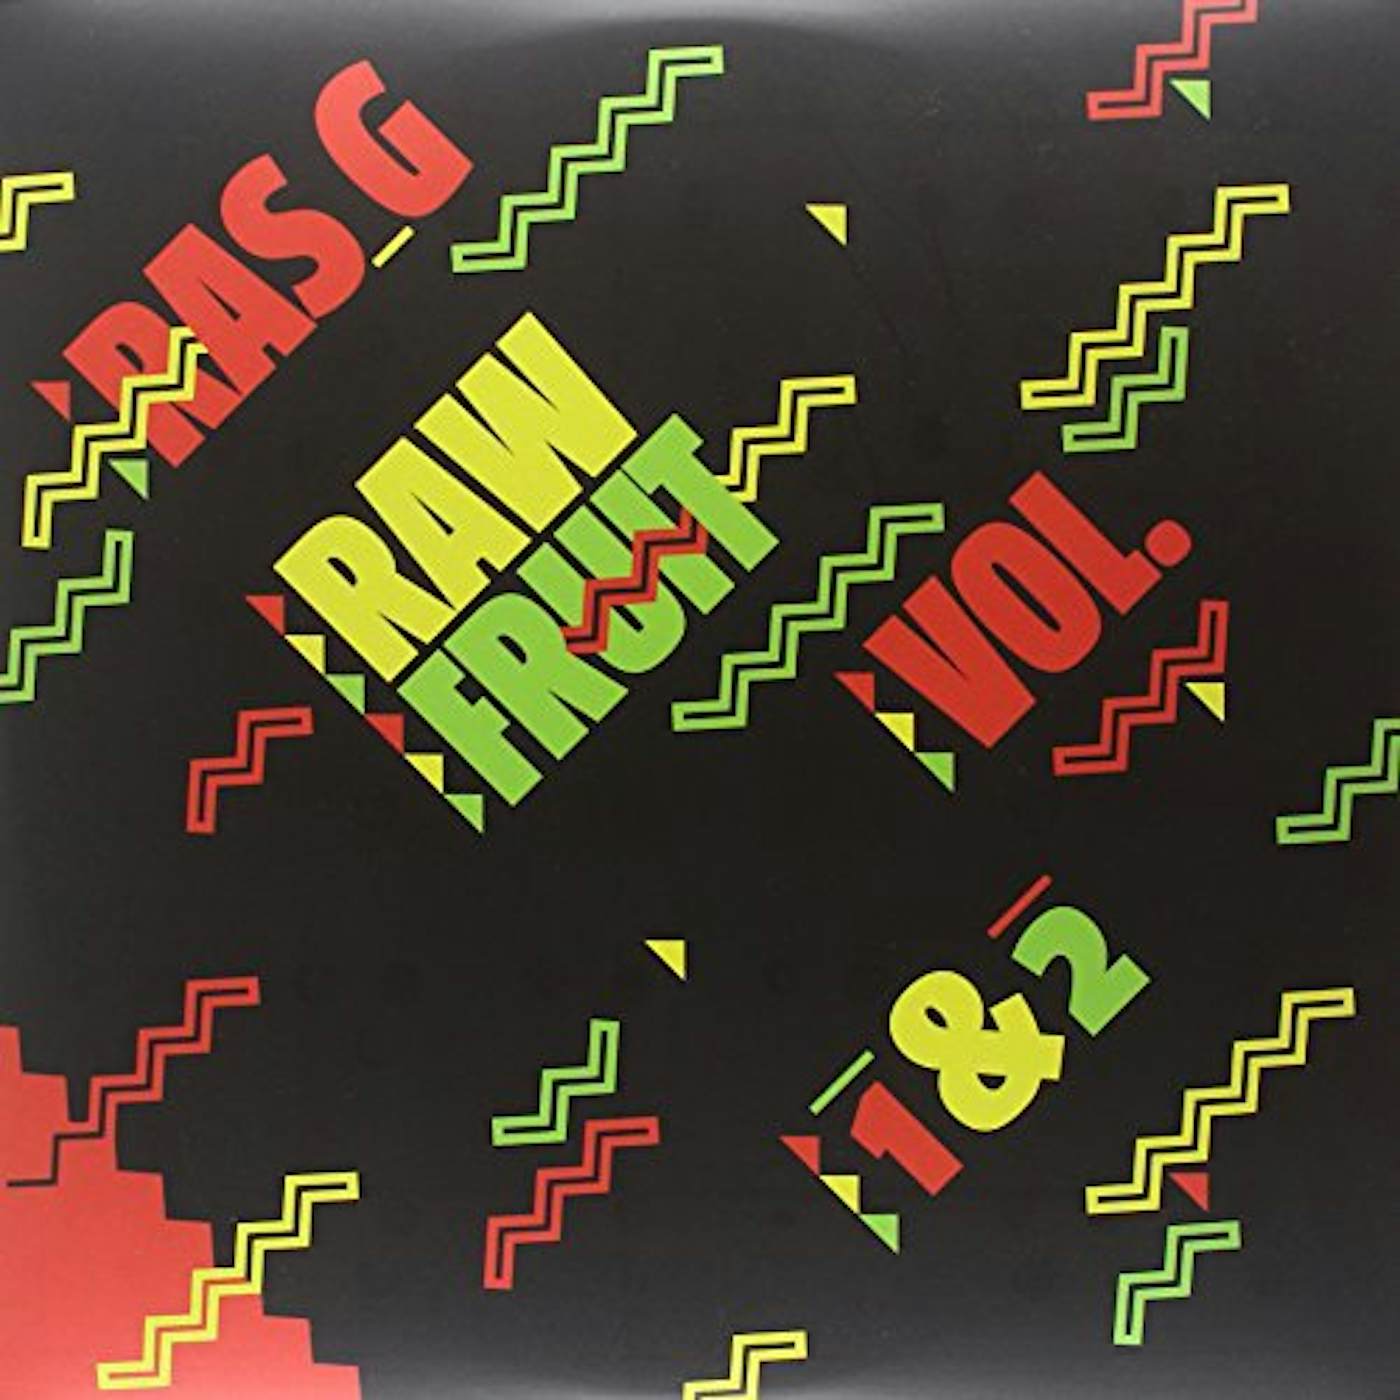 Ras G RAW FRUIT VOL 1-2 Vinyl Record - Digital Download Included